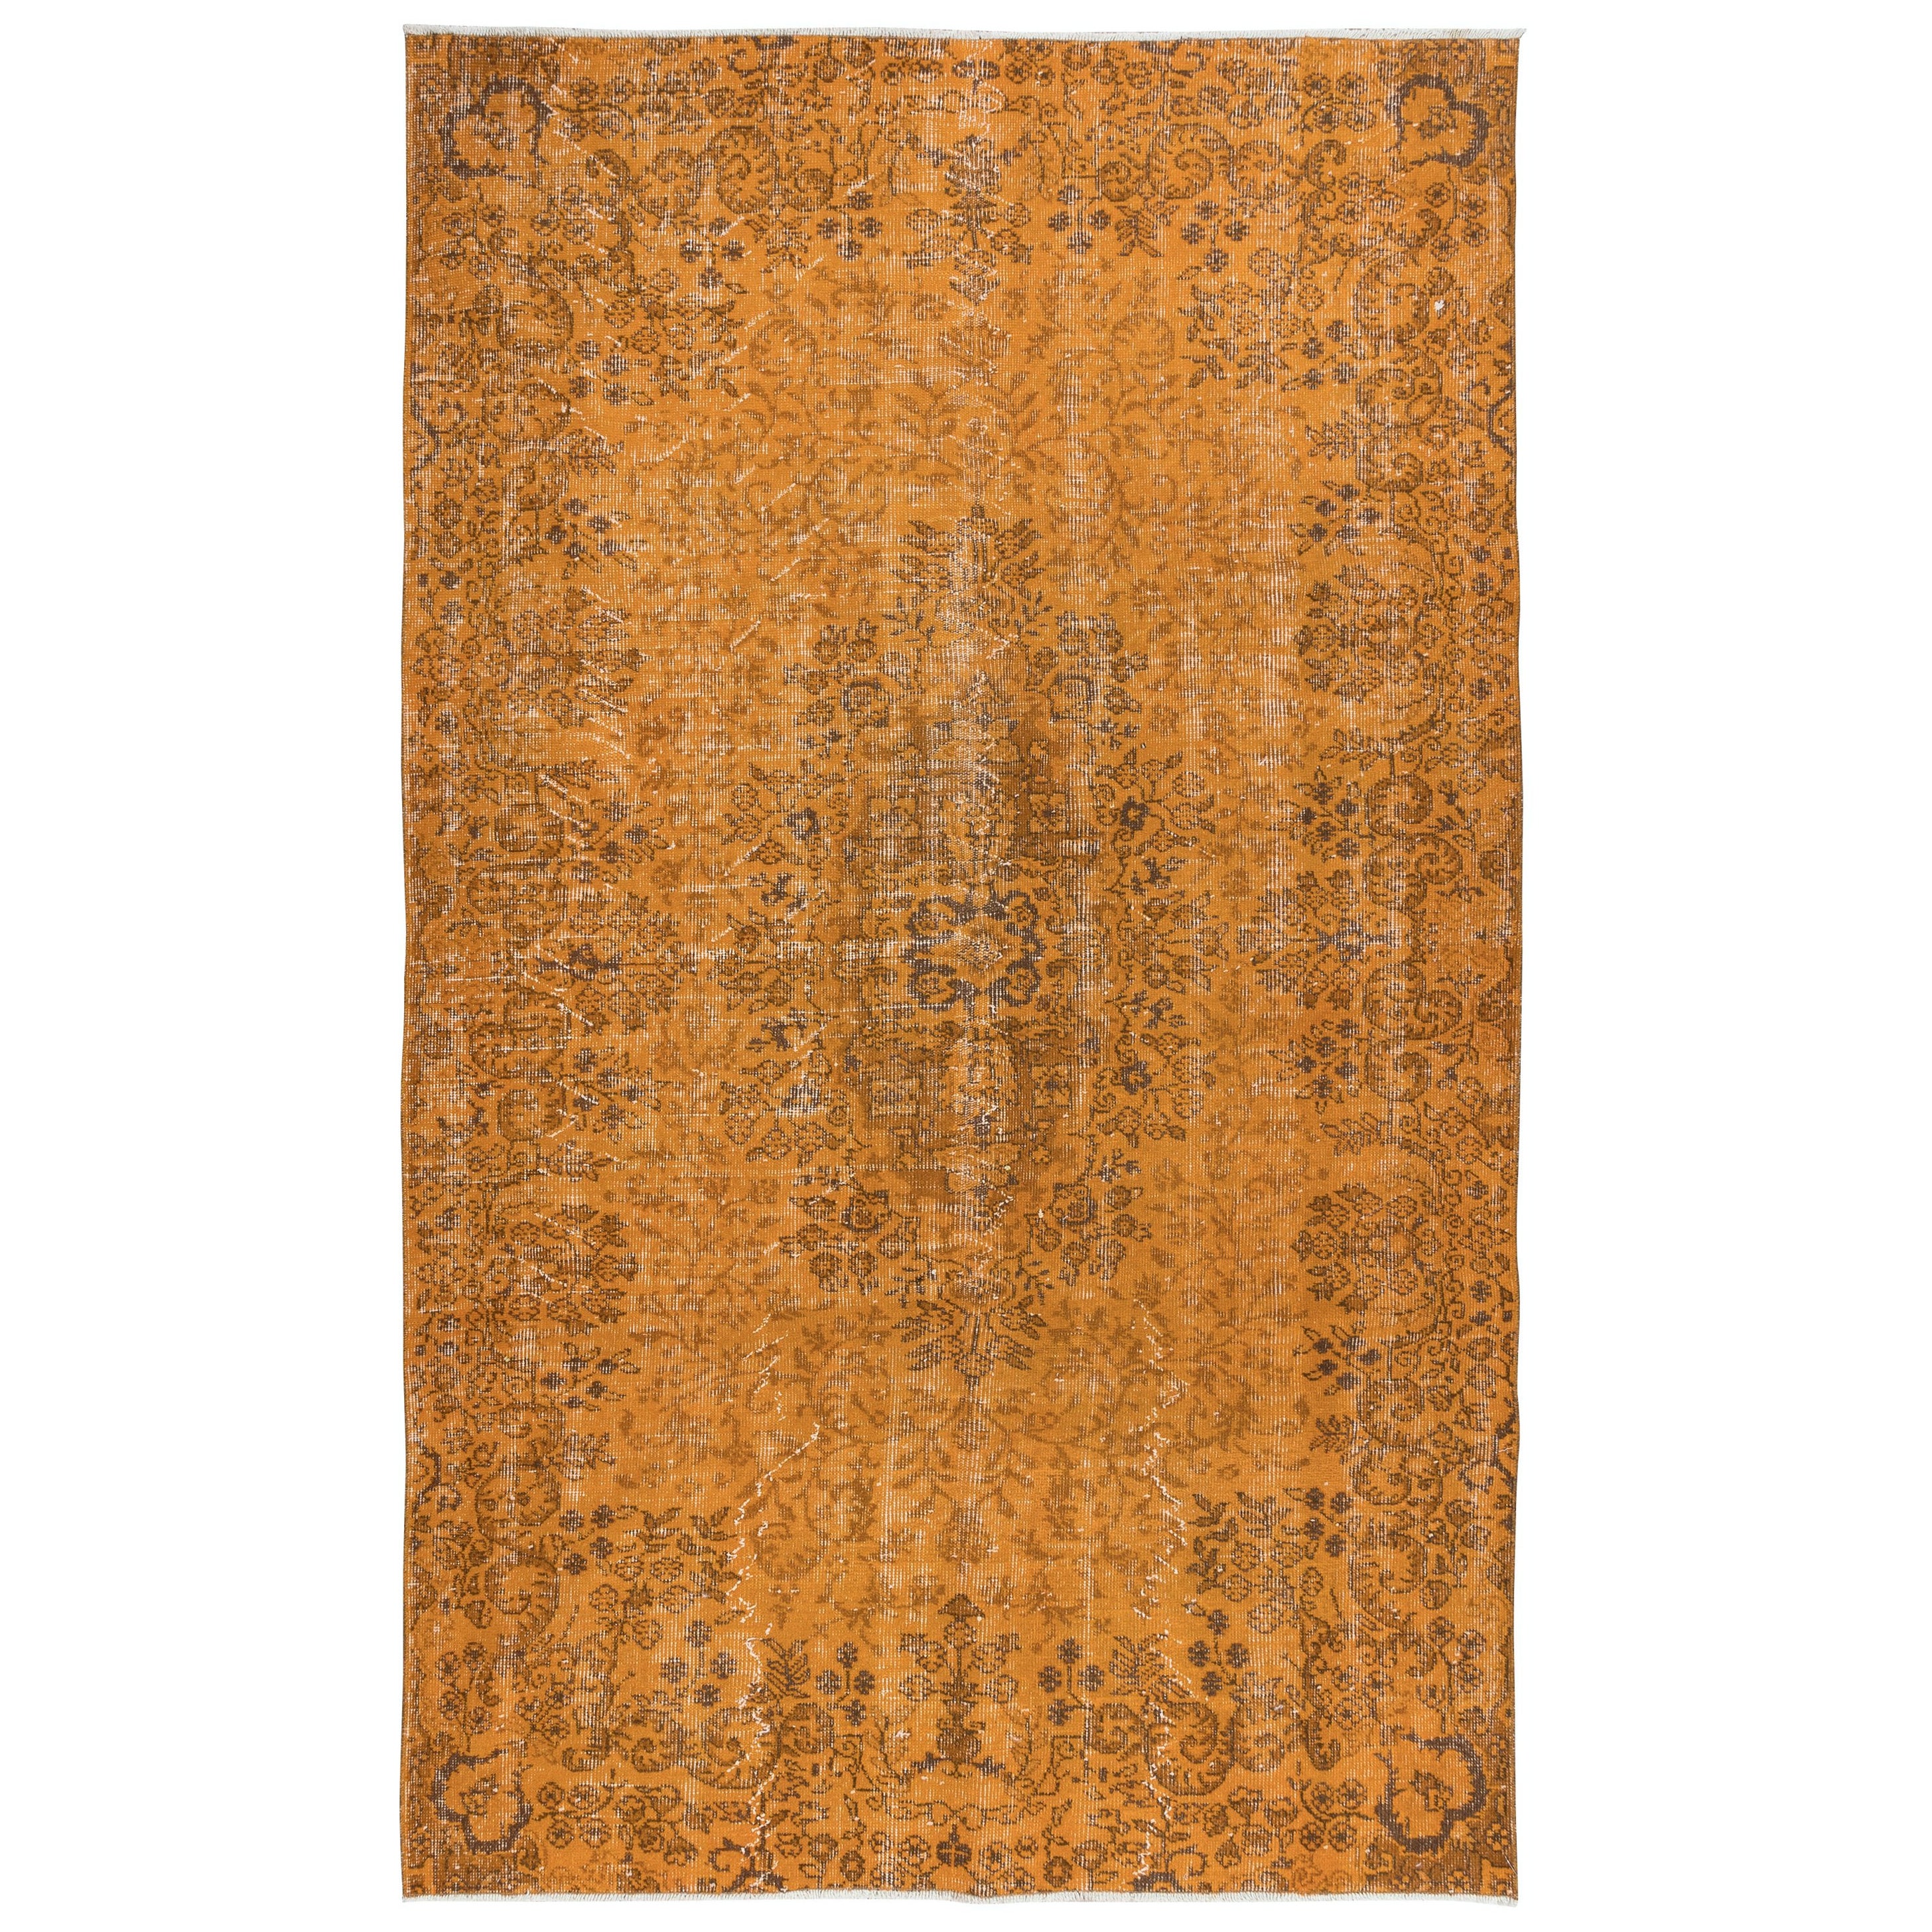 5.7x9.2 Ft Rustic Turkish Area Rug, Orange Handmade Contemporary Wool Carpet